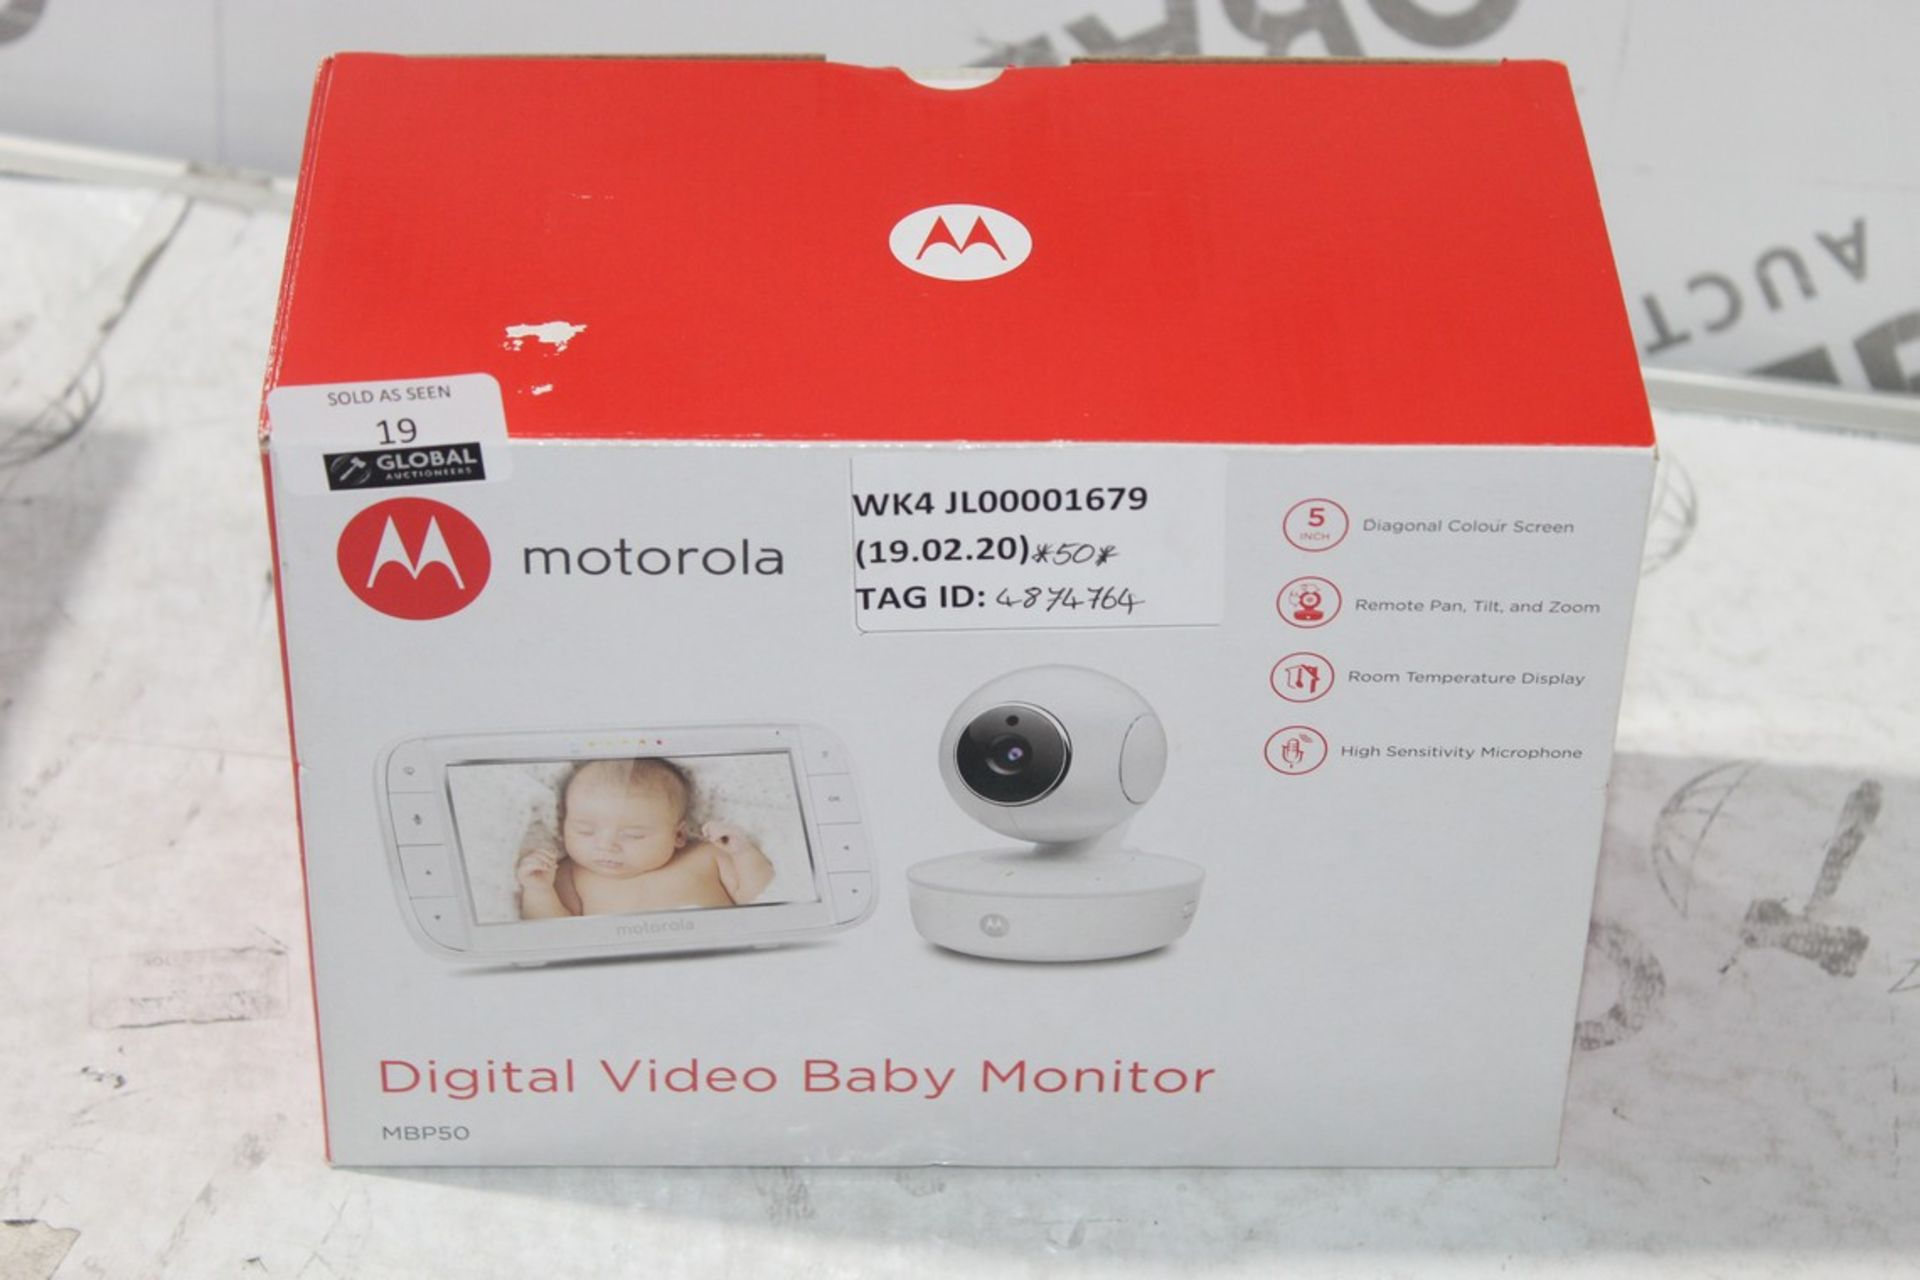 Boxed Motorola MBP50, Digital Baby Monitor Set, RR